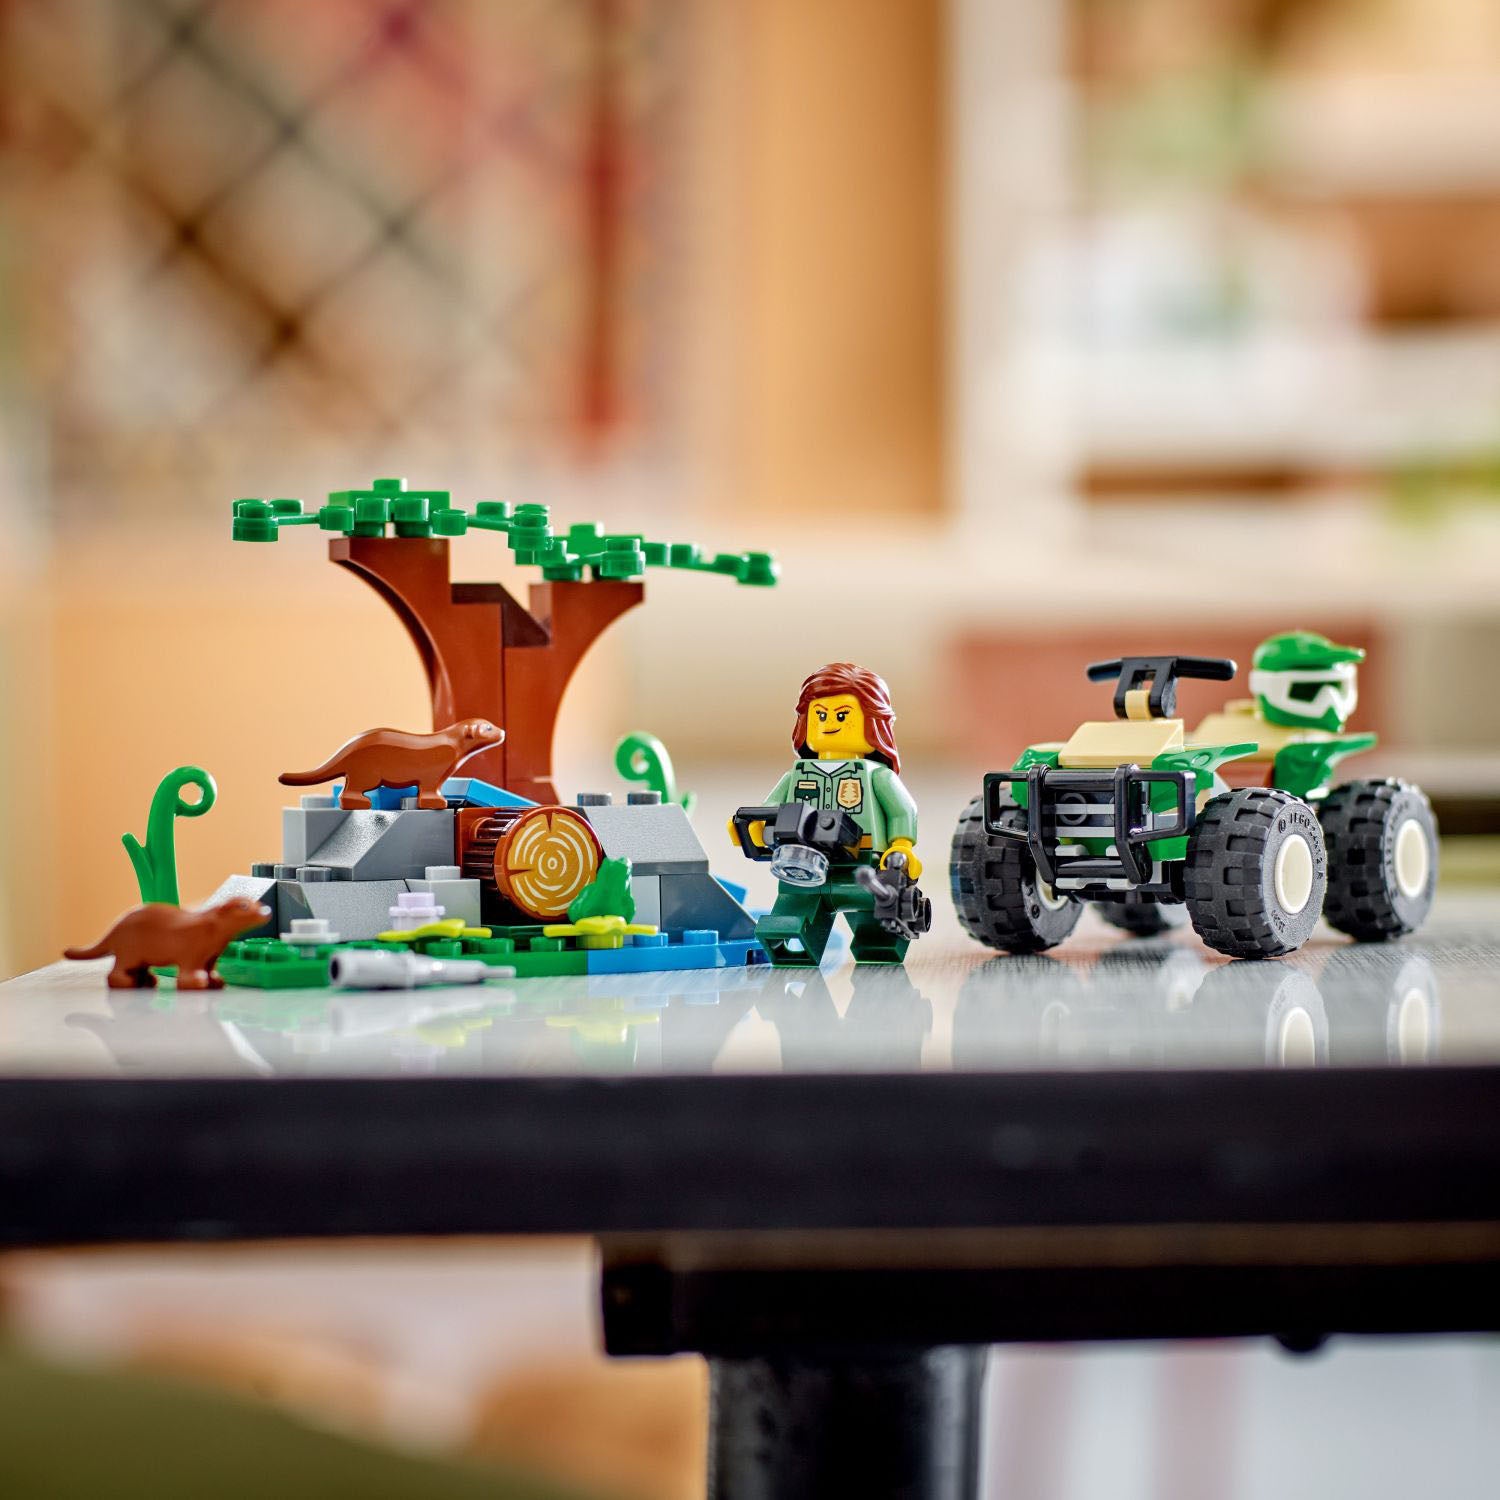 LEGO City: ATV and Otter Habitat